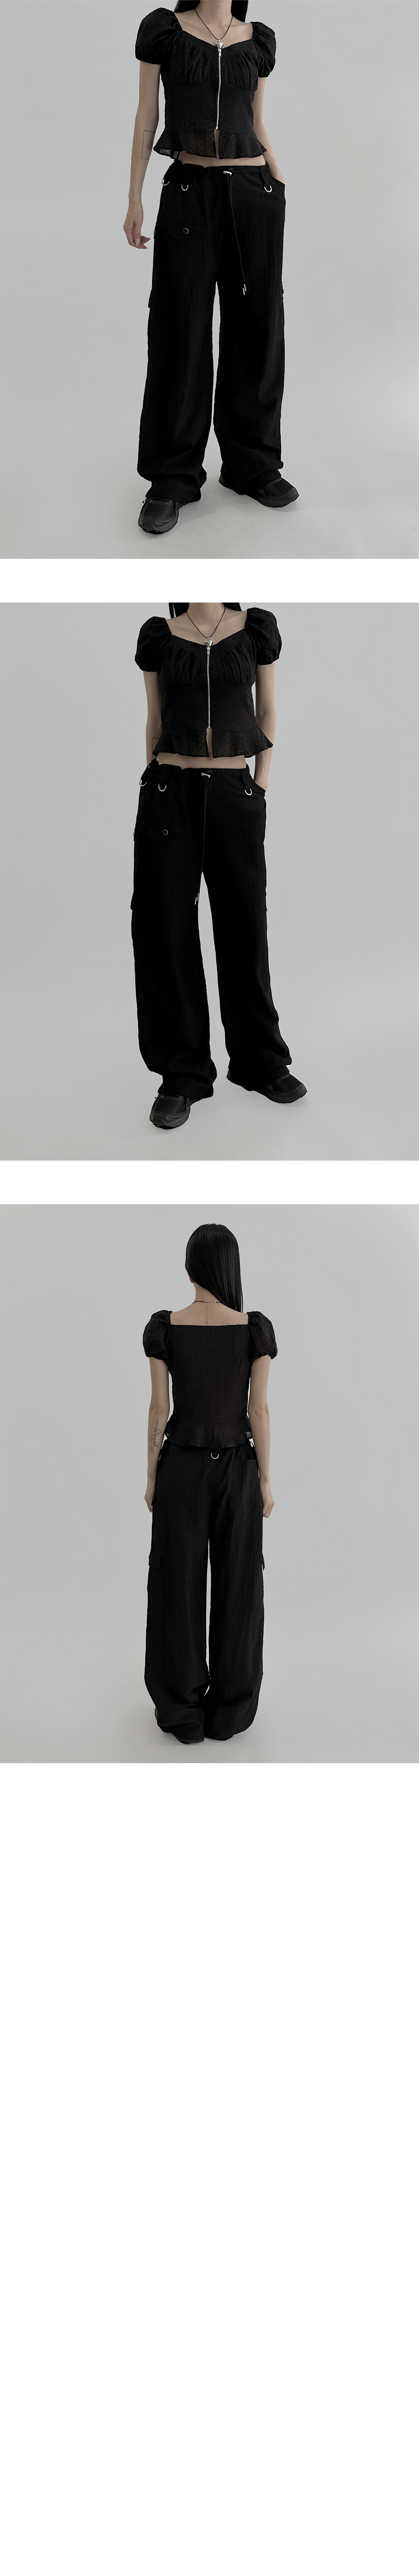 suspenders skirt/pants charcoal color image-S1L20